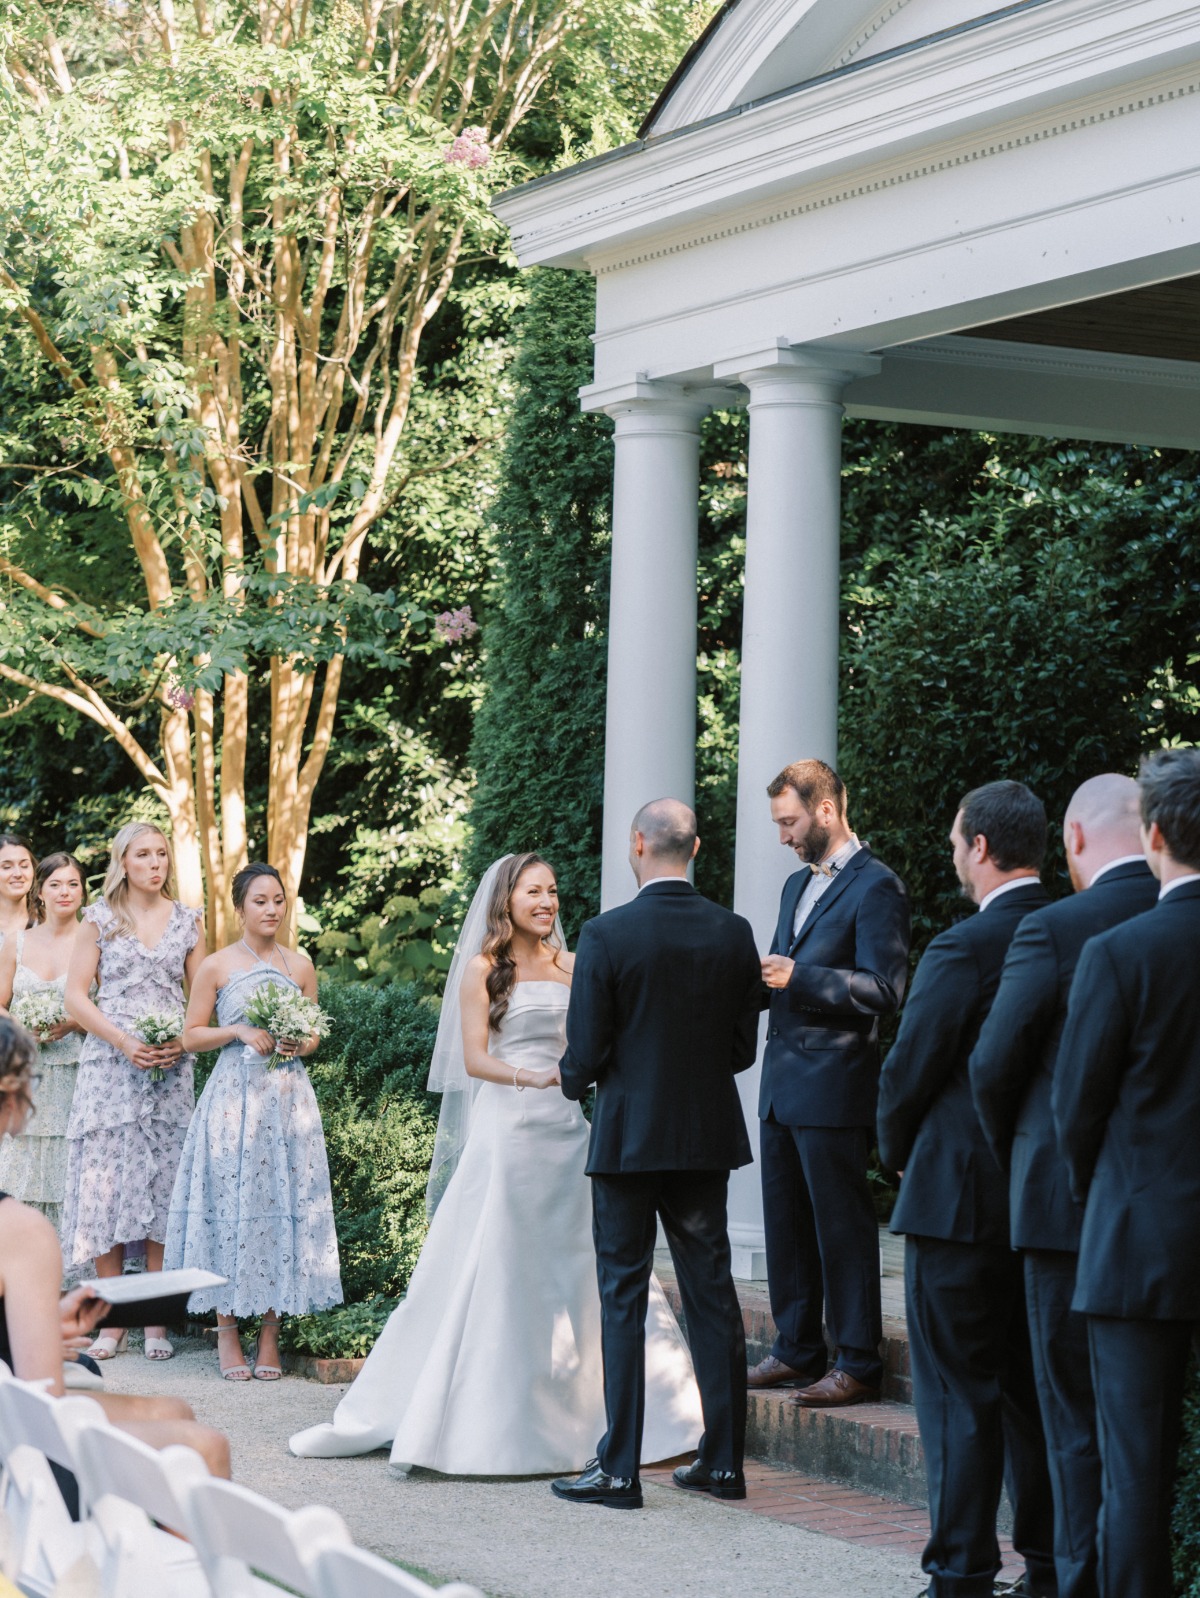 outdoor wedding ceremony at Duke Mansion in North Carolina